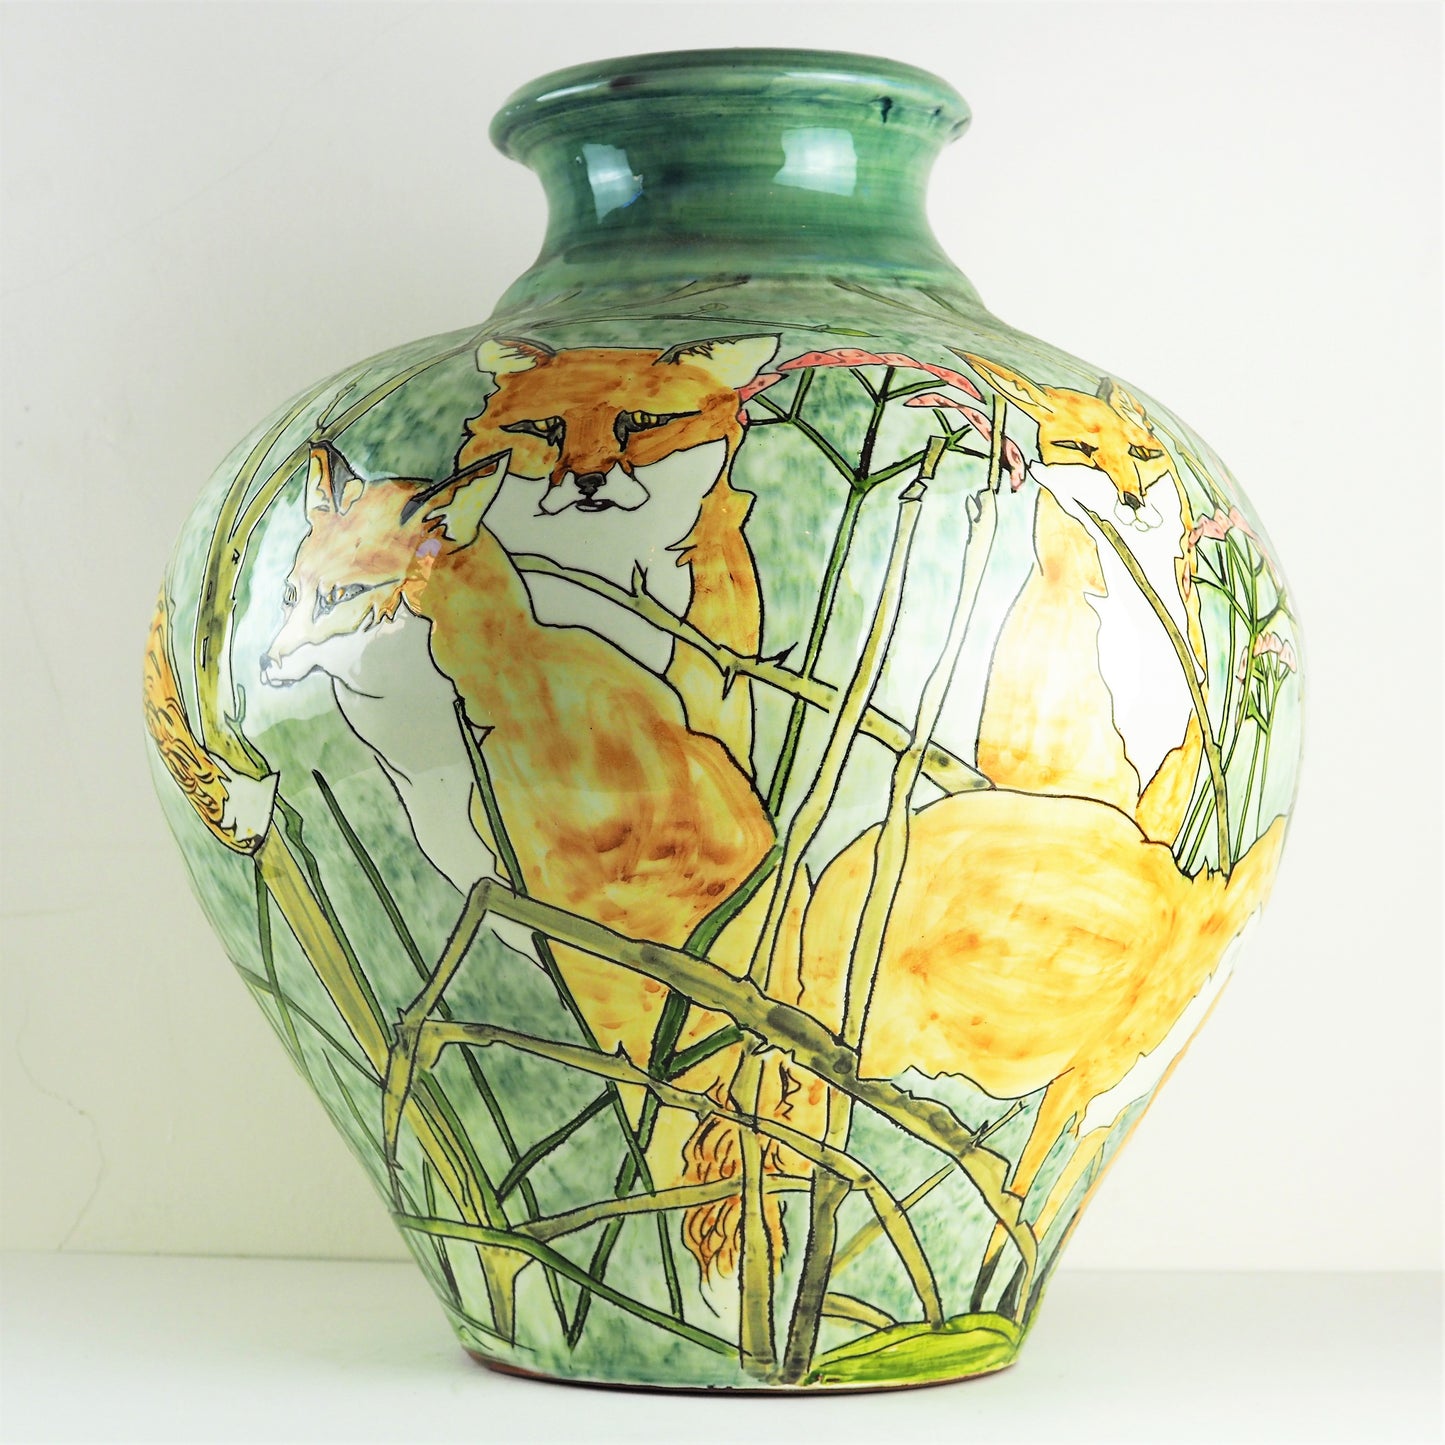 Hale, Jennie – Decorated Earthenware Vase With Foxes | Jennie Hale | Primavera Gallery